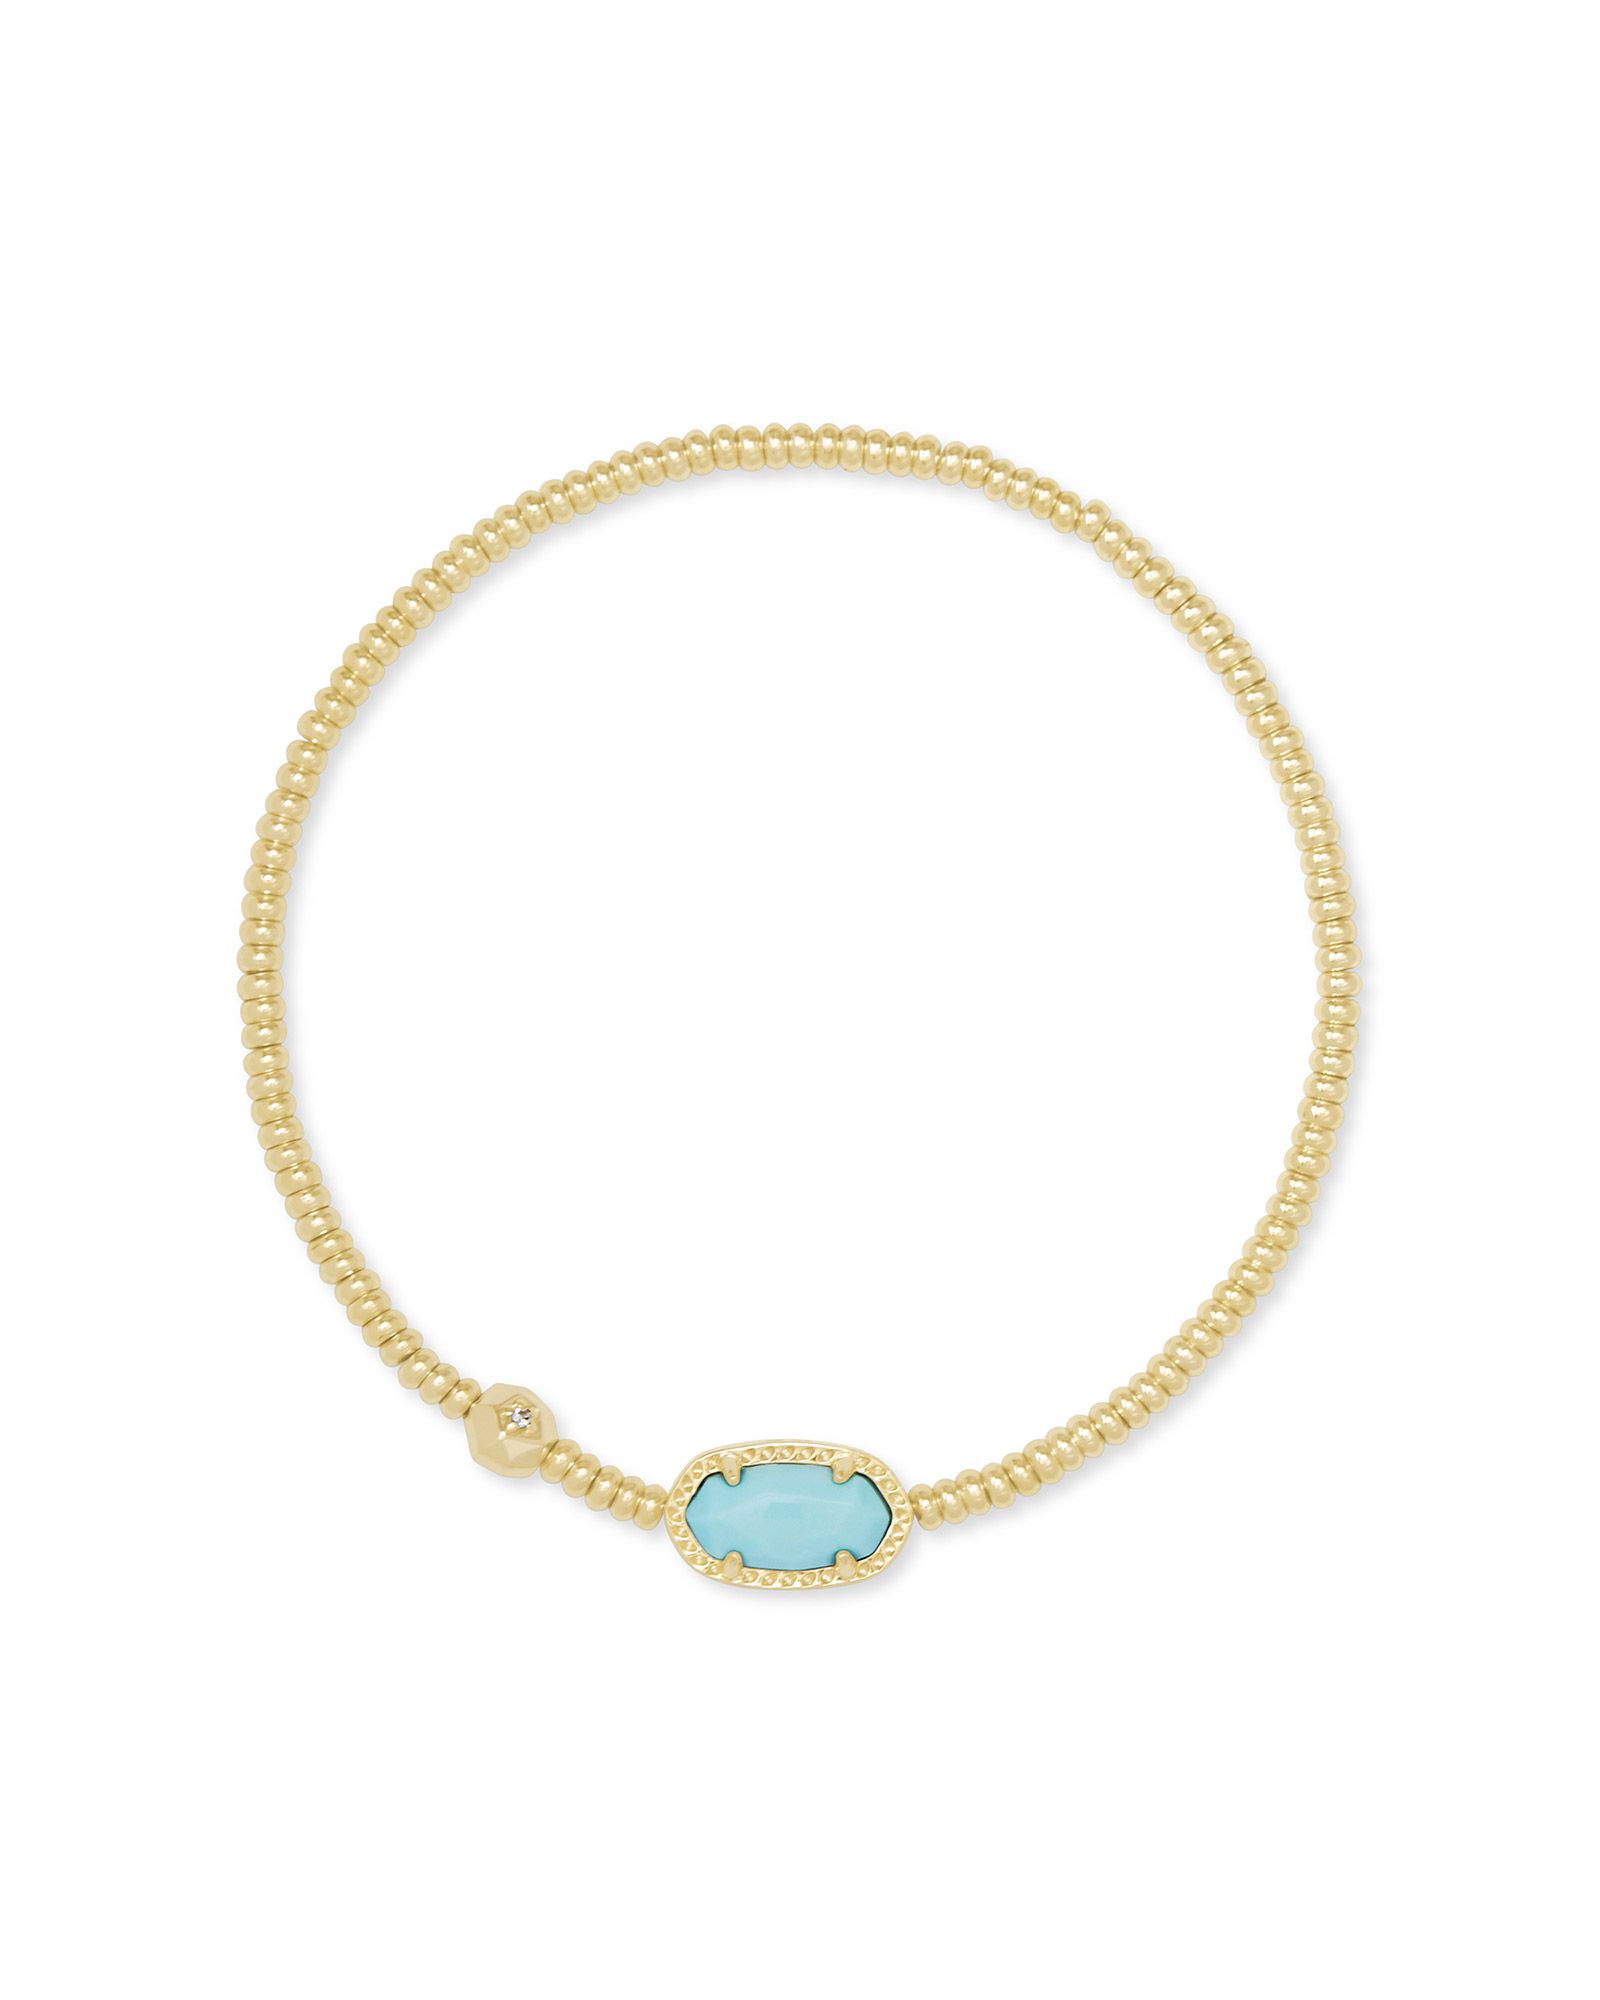 Grayson Gold Stretch Bracelet in Light Blue Magnesite | Kendra Scott | Kendra Scott